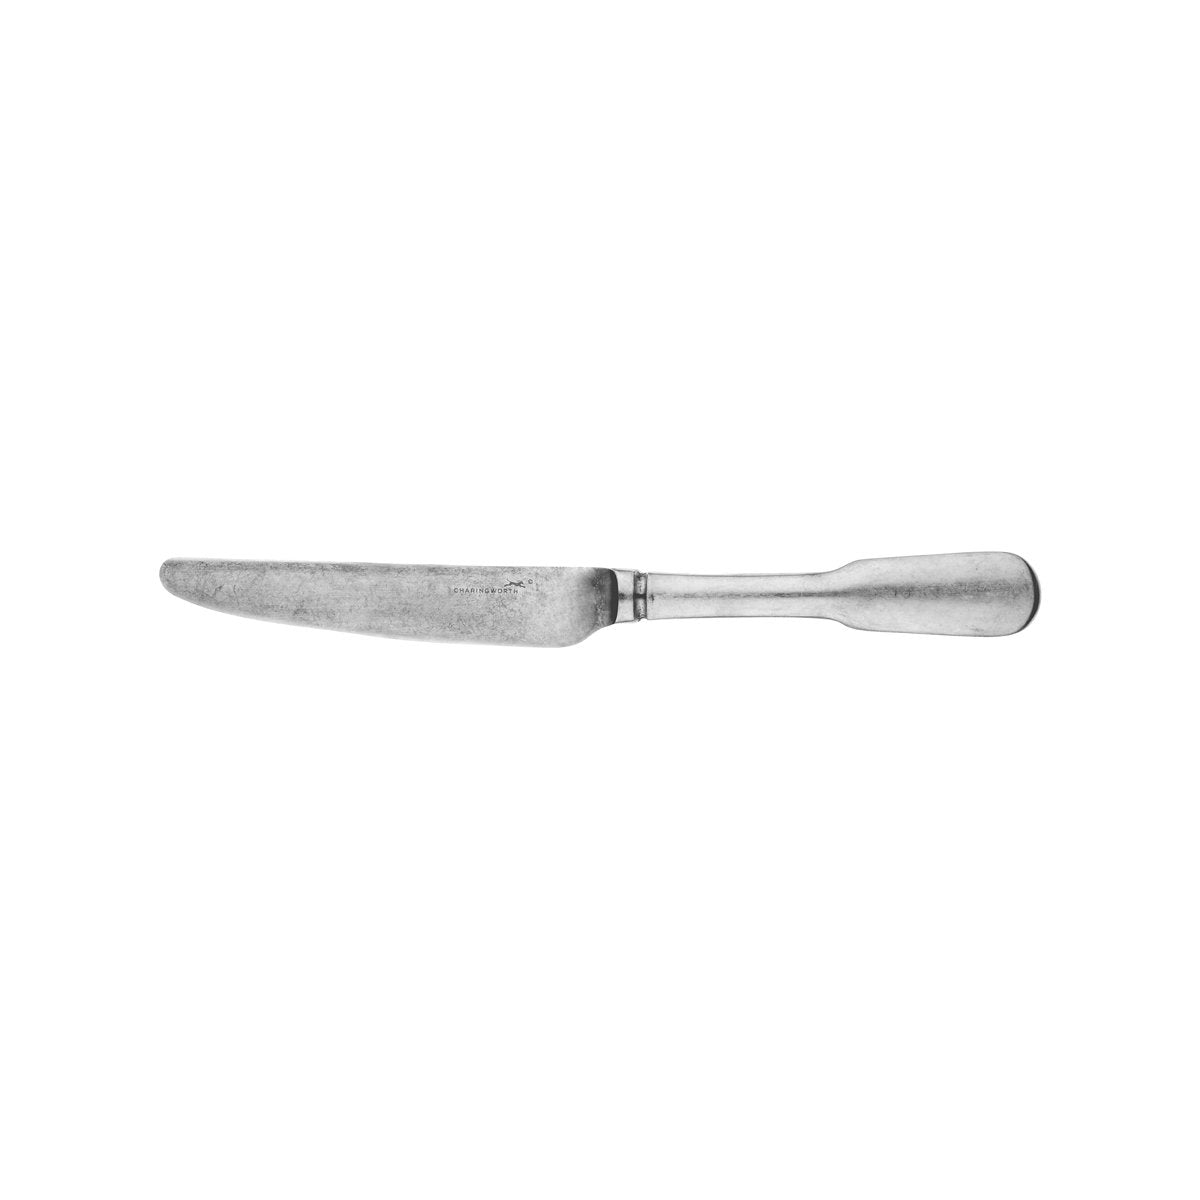 SWW-FDL01 Charingworth Fiddle Table Knife Tomkin Australia Hospitality Supplies